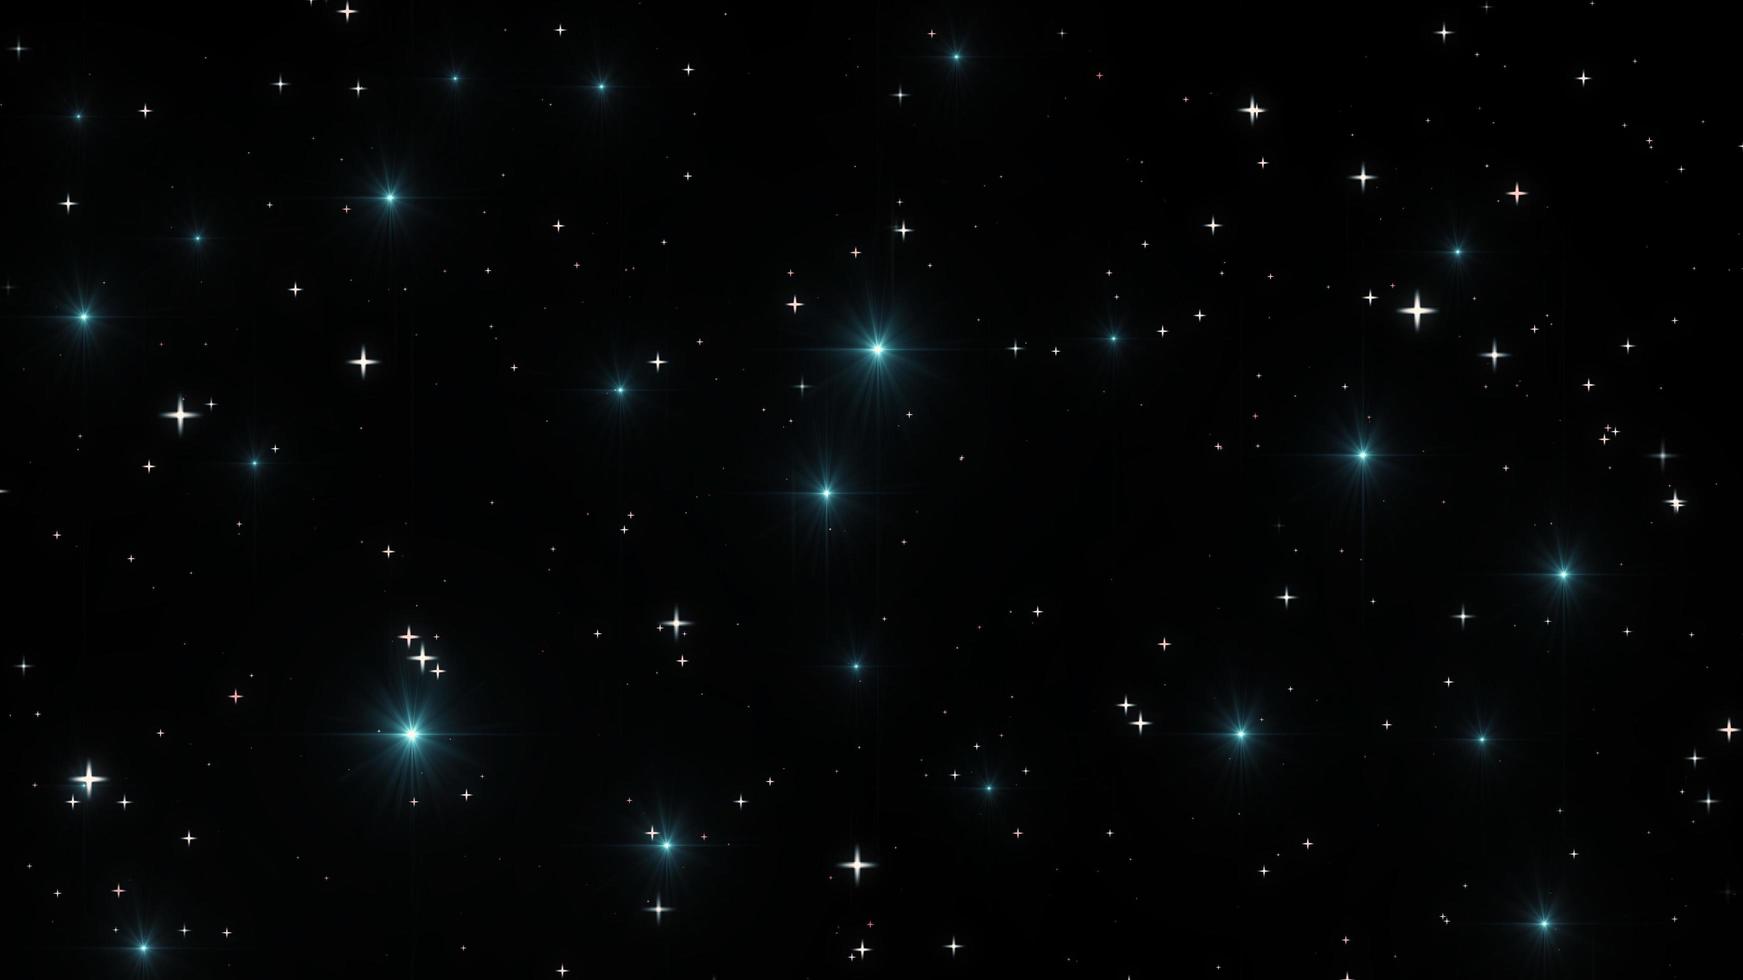 Night sky with stars sparkling on black background photo